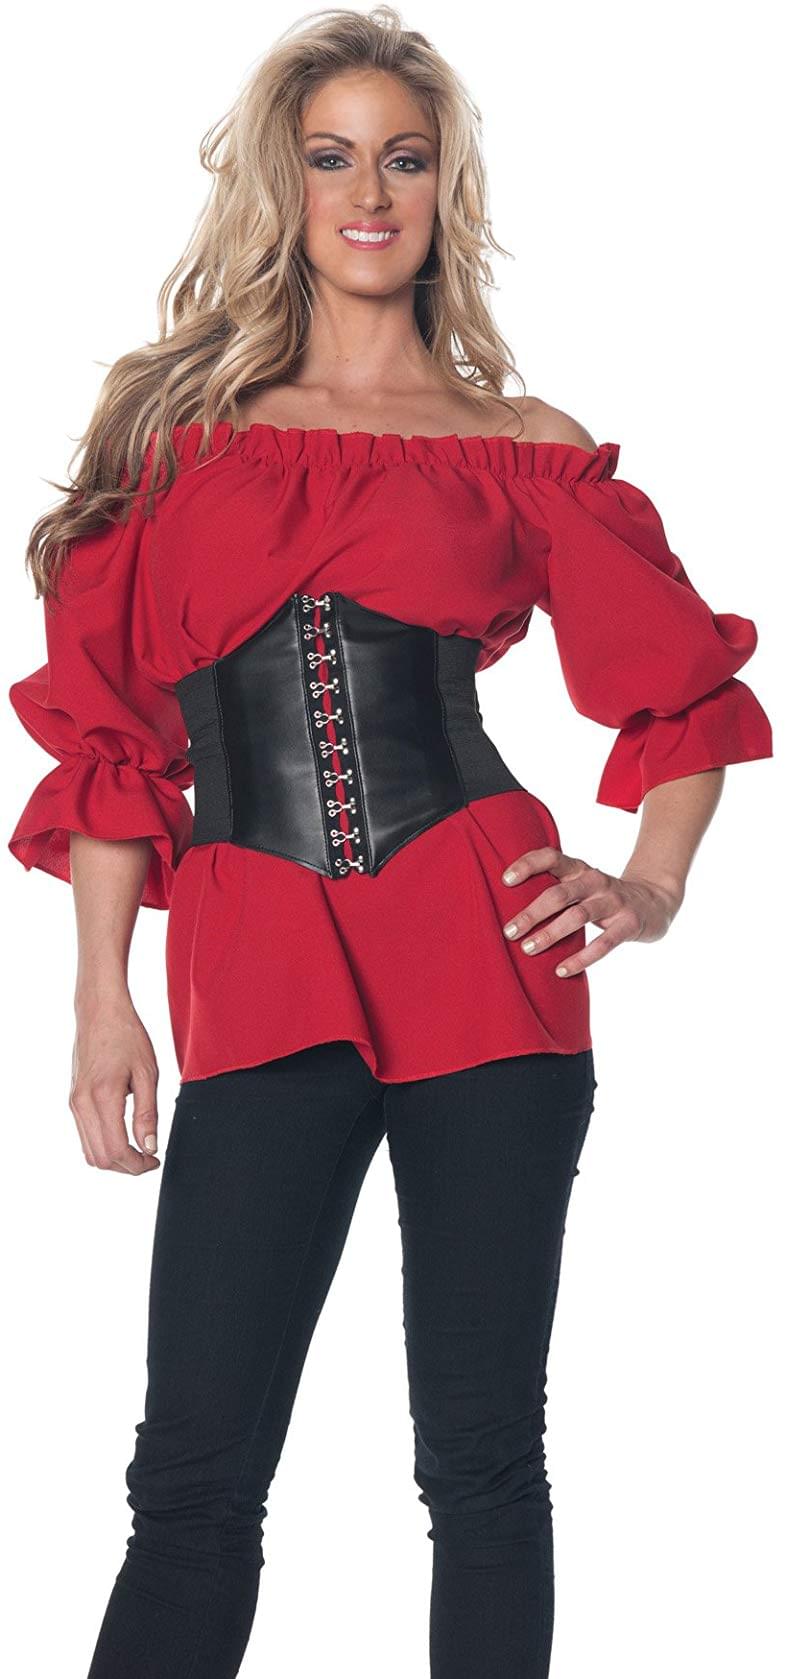 Renaissance Adult Costume Red Blouse